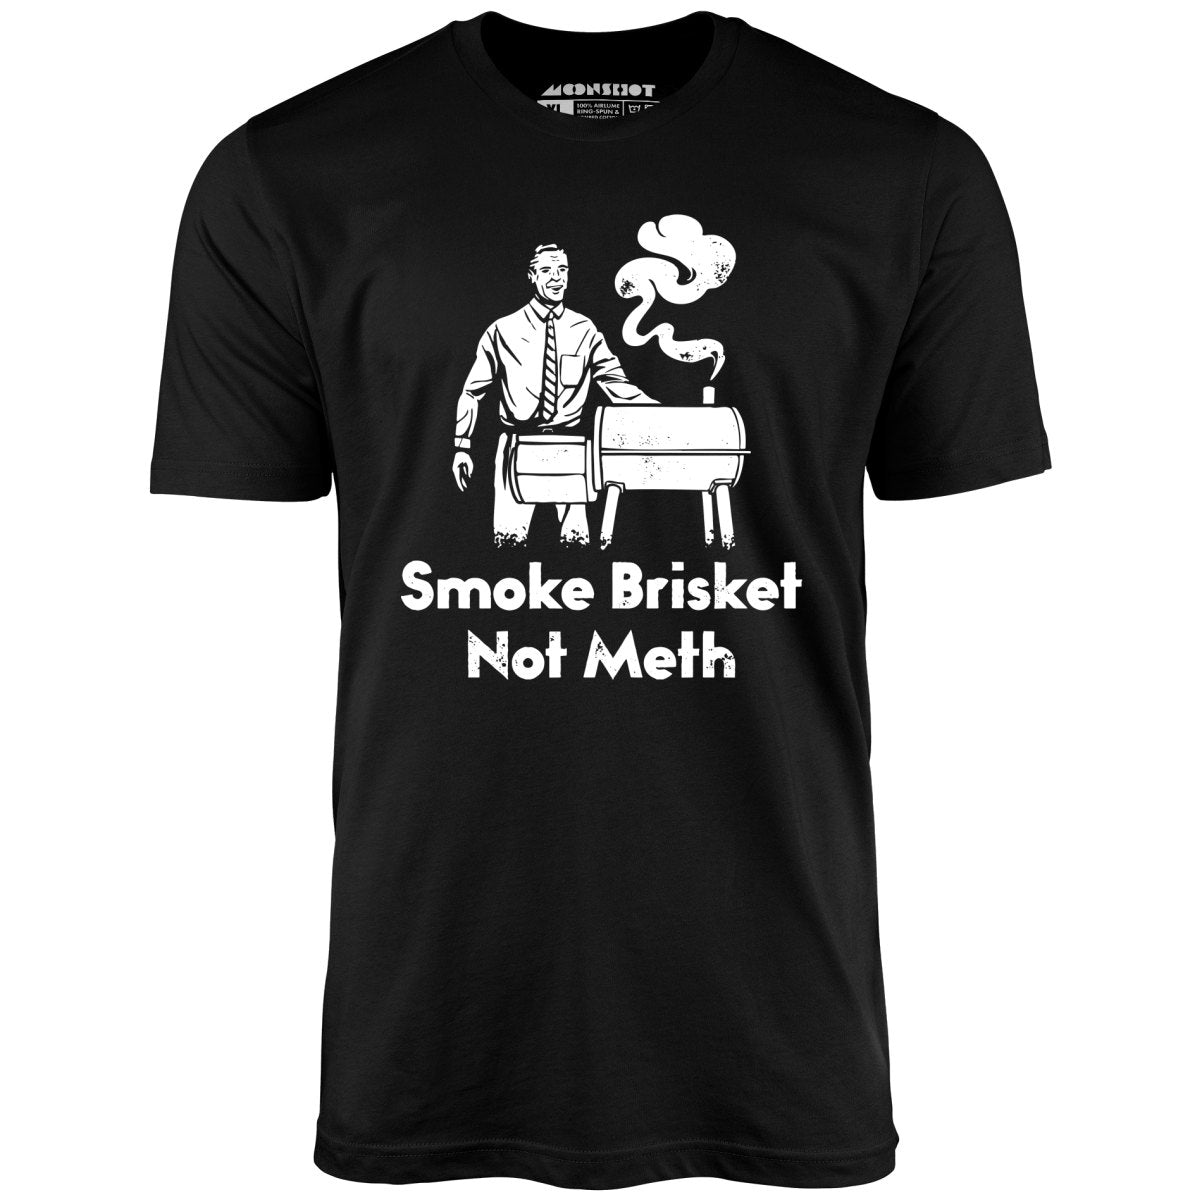 Smoke Brisket Not Meth - Unisex T-Shirt